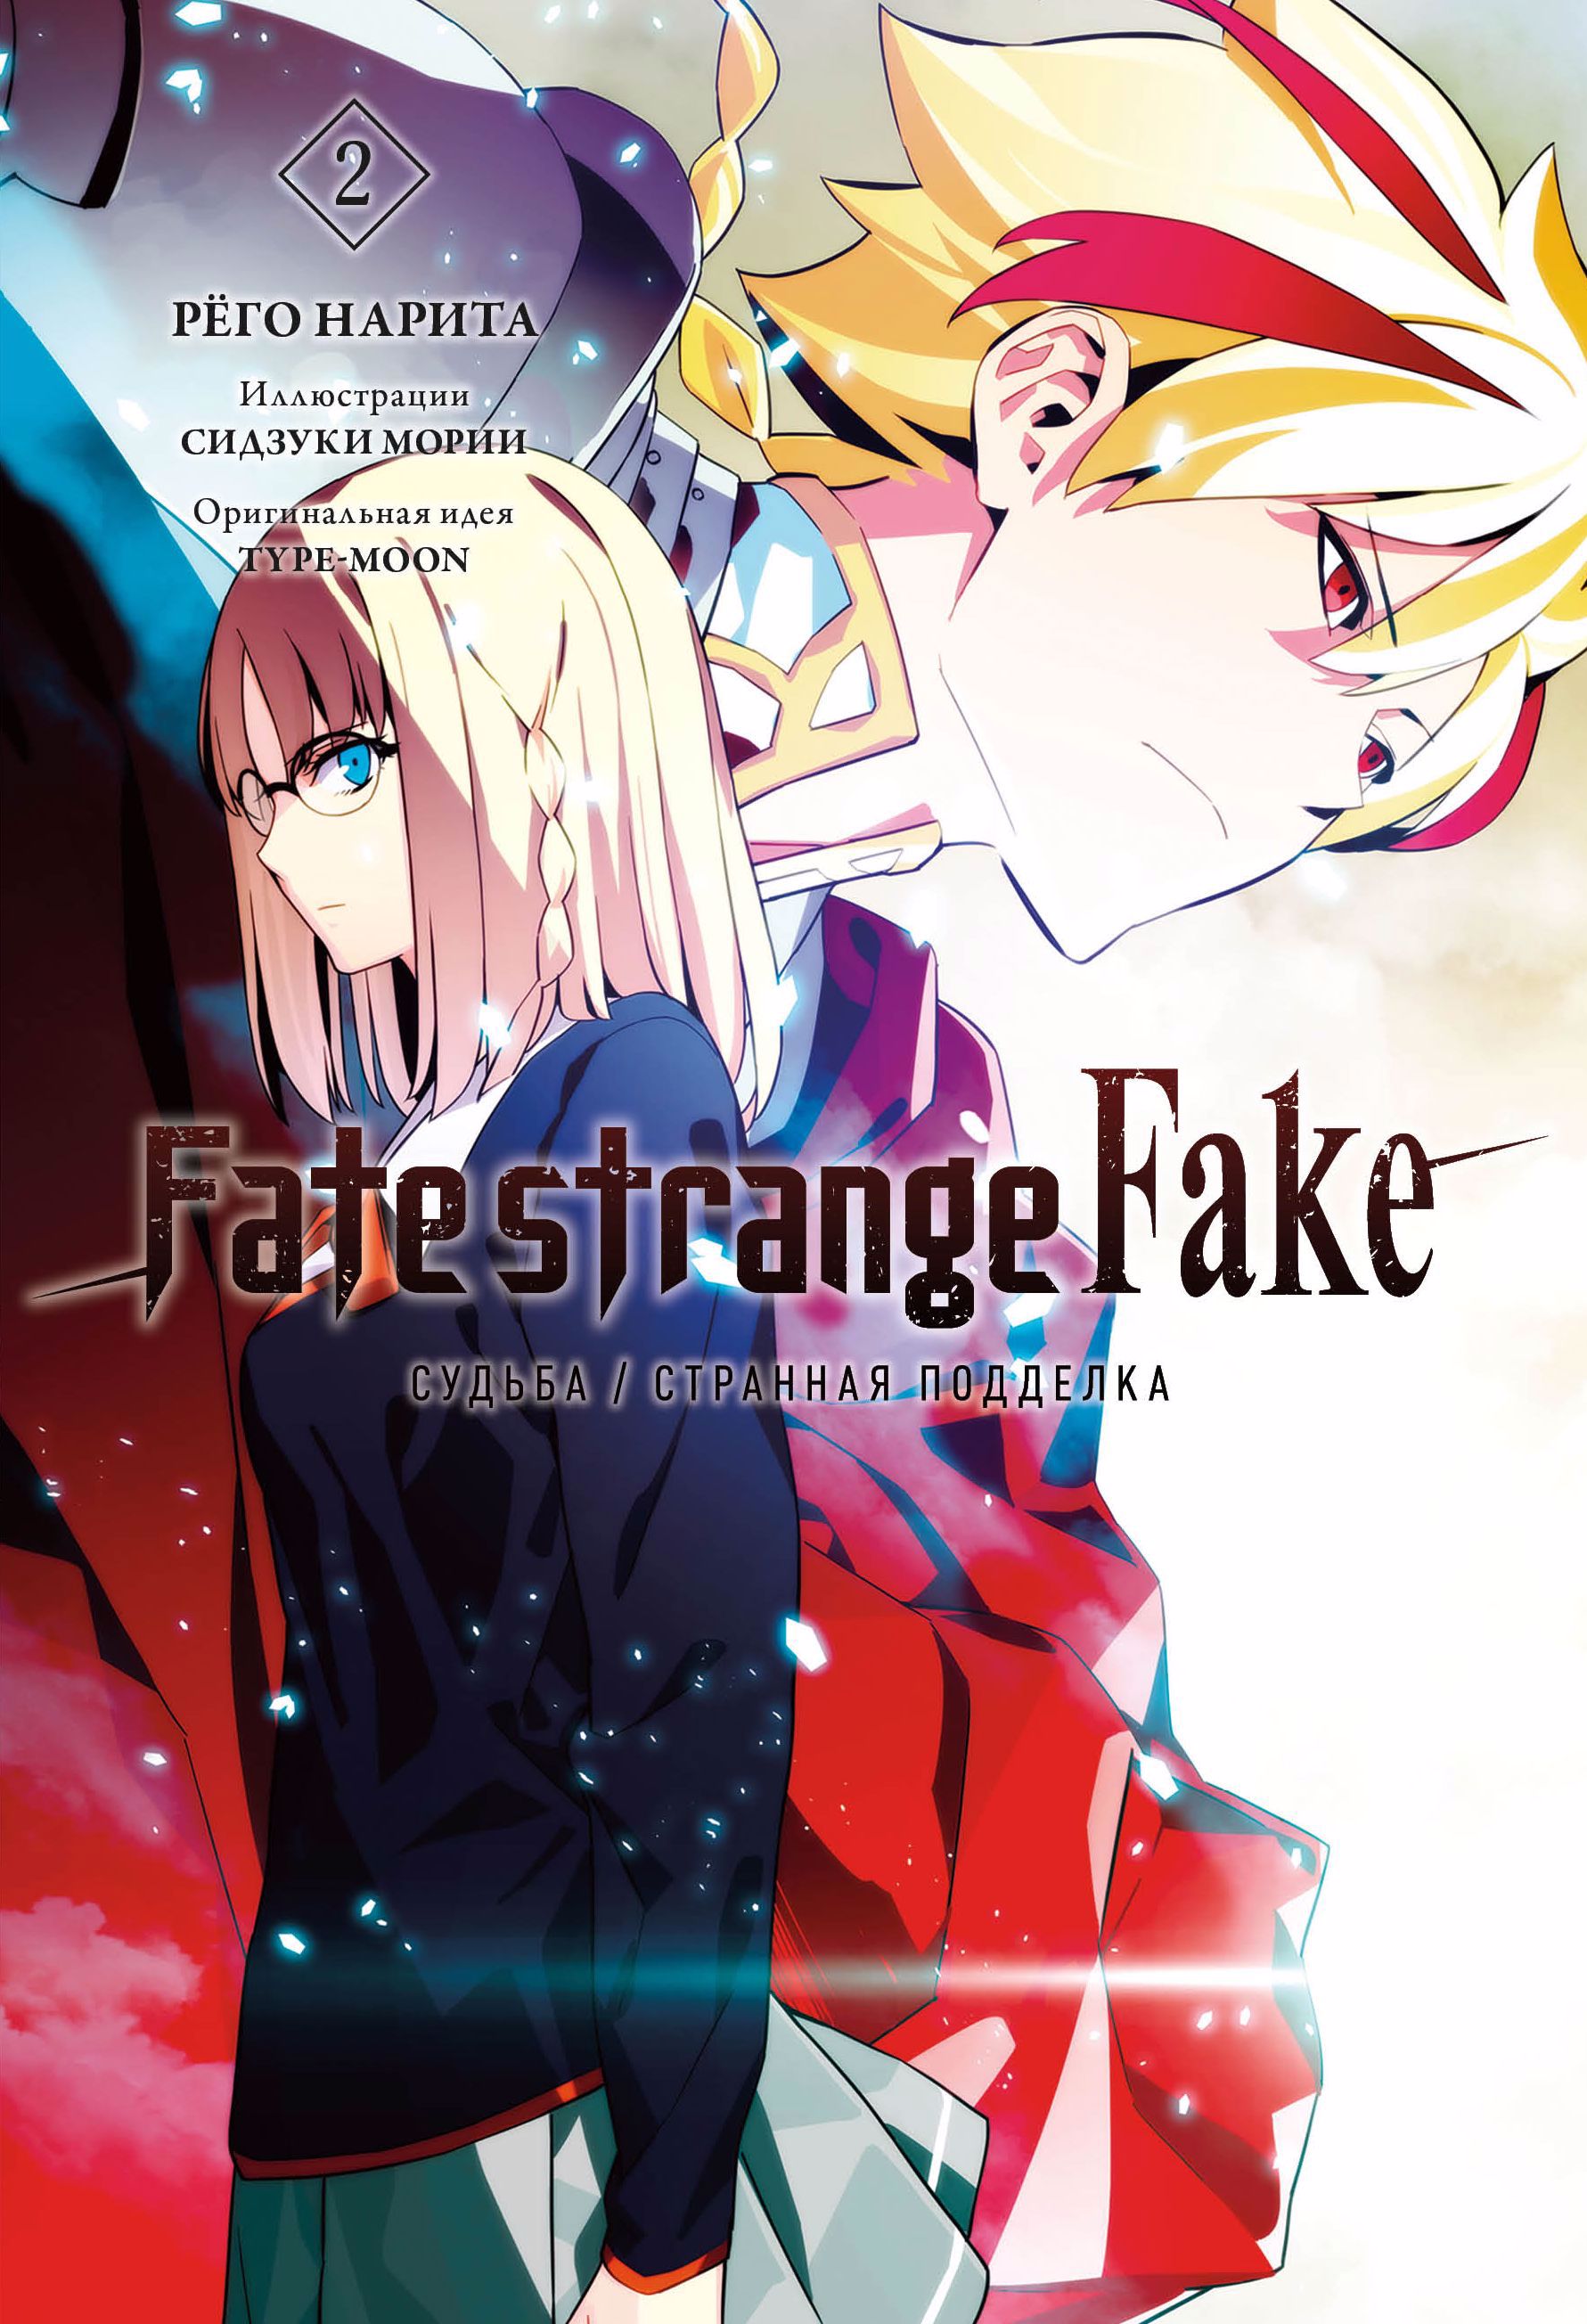 Рёго Нарита Fate/strange Fake. Судьба/Странная подделка. Том 2 нарита рёго fate strange fake судьба странная подделка том 1